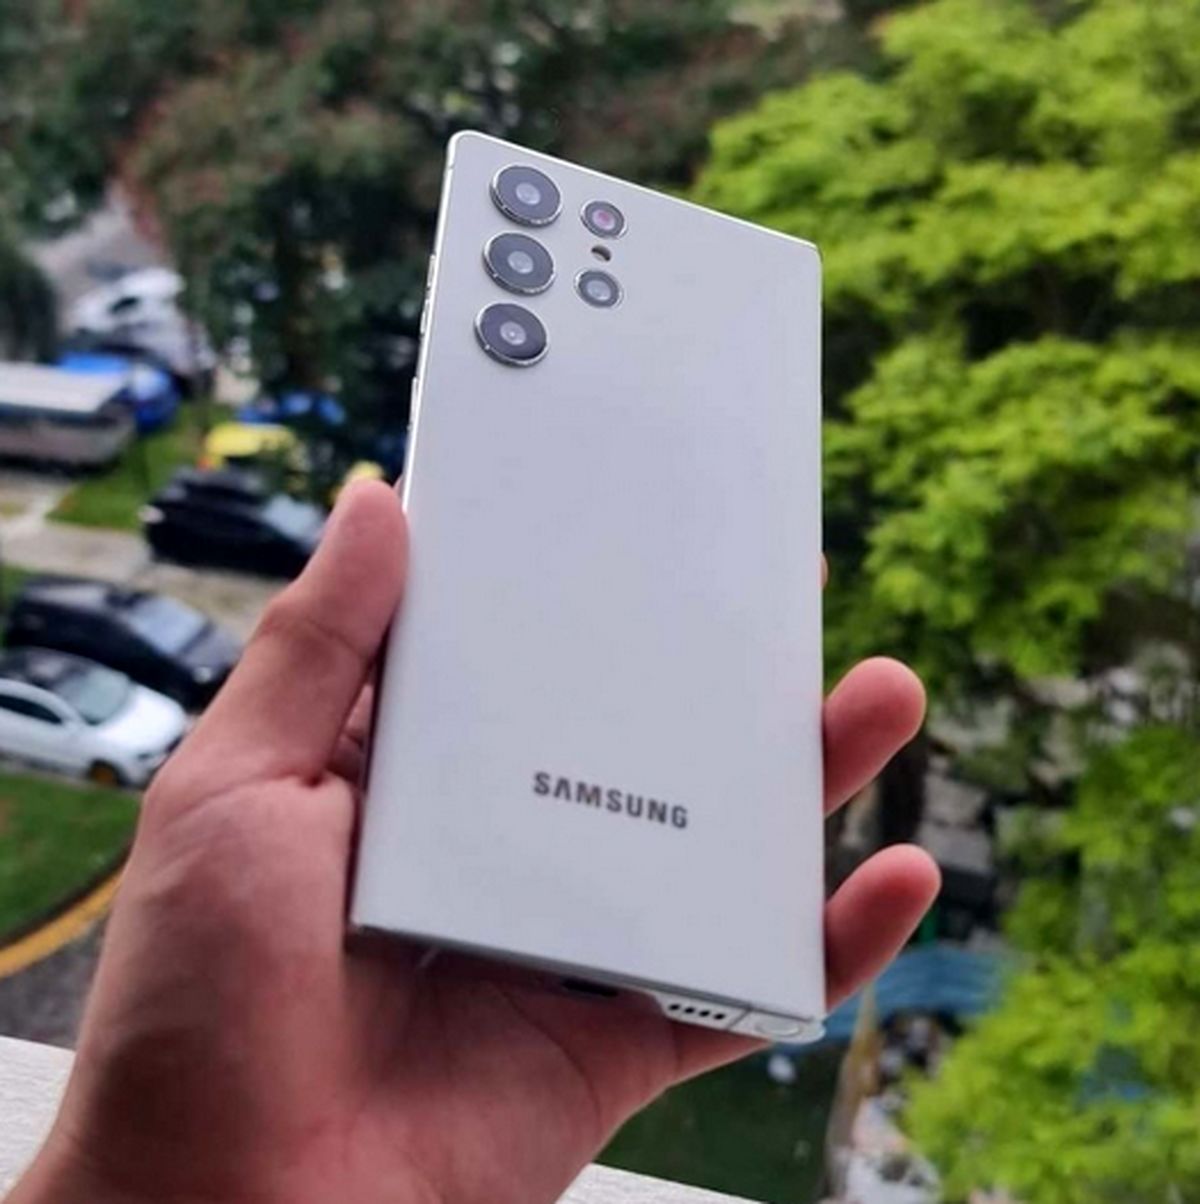 Samsung Galaxy S22 Series